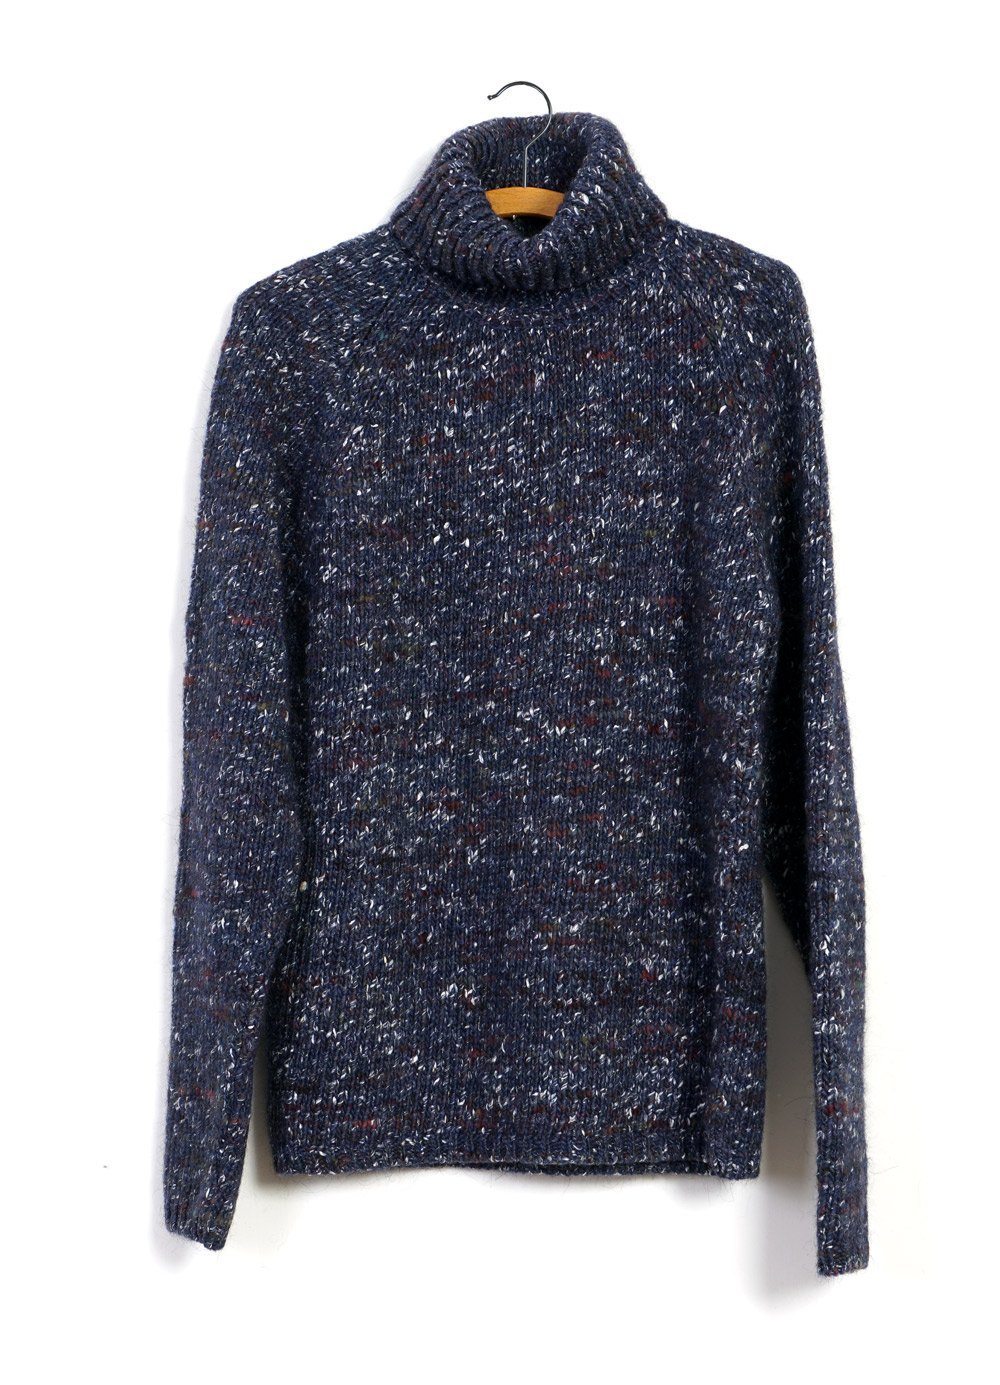 HANSEN Garments - NICK | Chunky Knitted Sweater | Bluetweed - HANSEN Garments